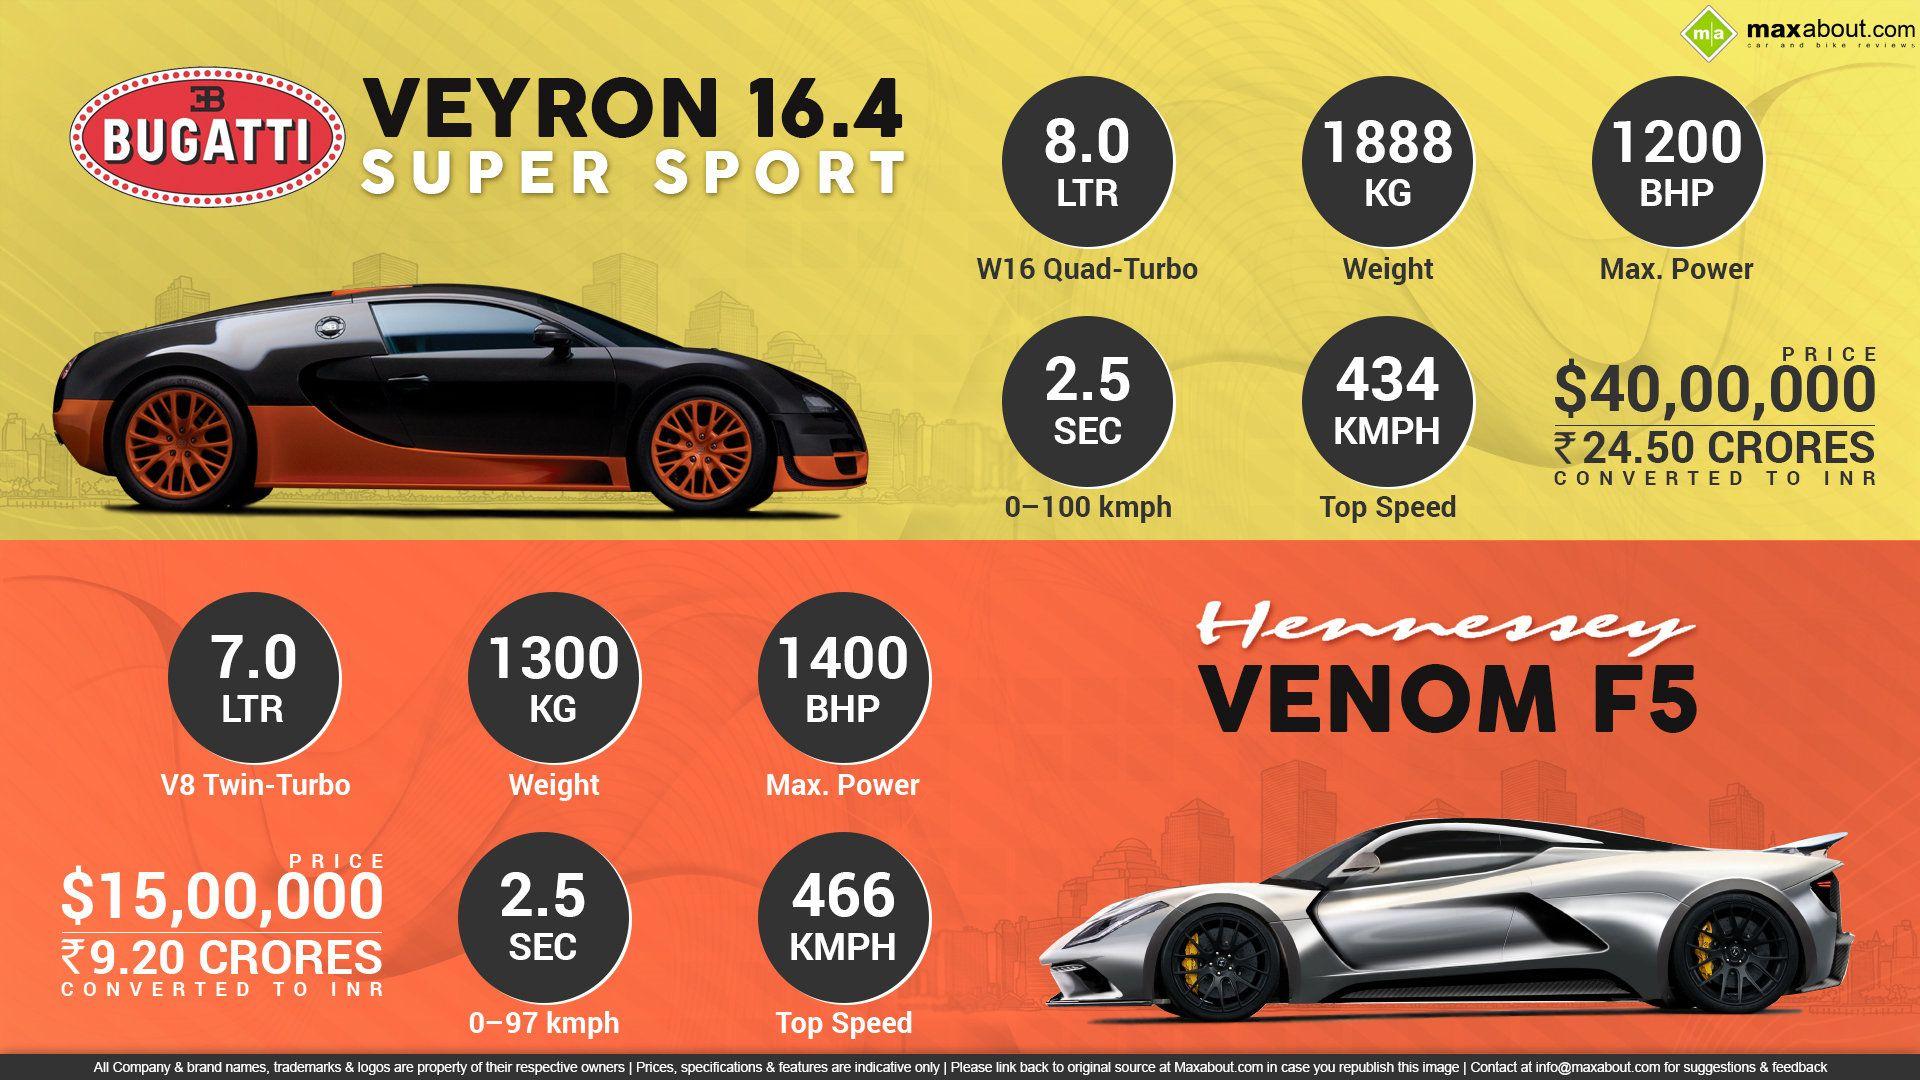 Hennessey Venom F5 Logo - Quick Comparison - Bugatti Veyron Super Sport vs. Hennessey Venom F5